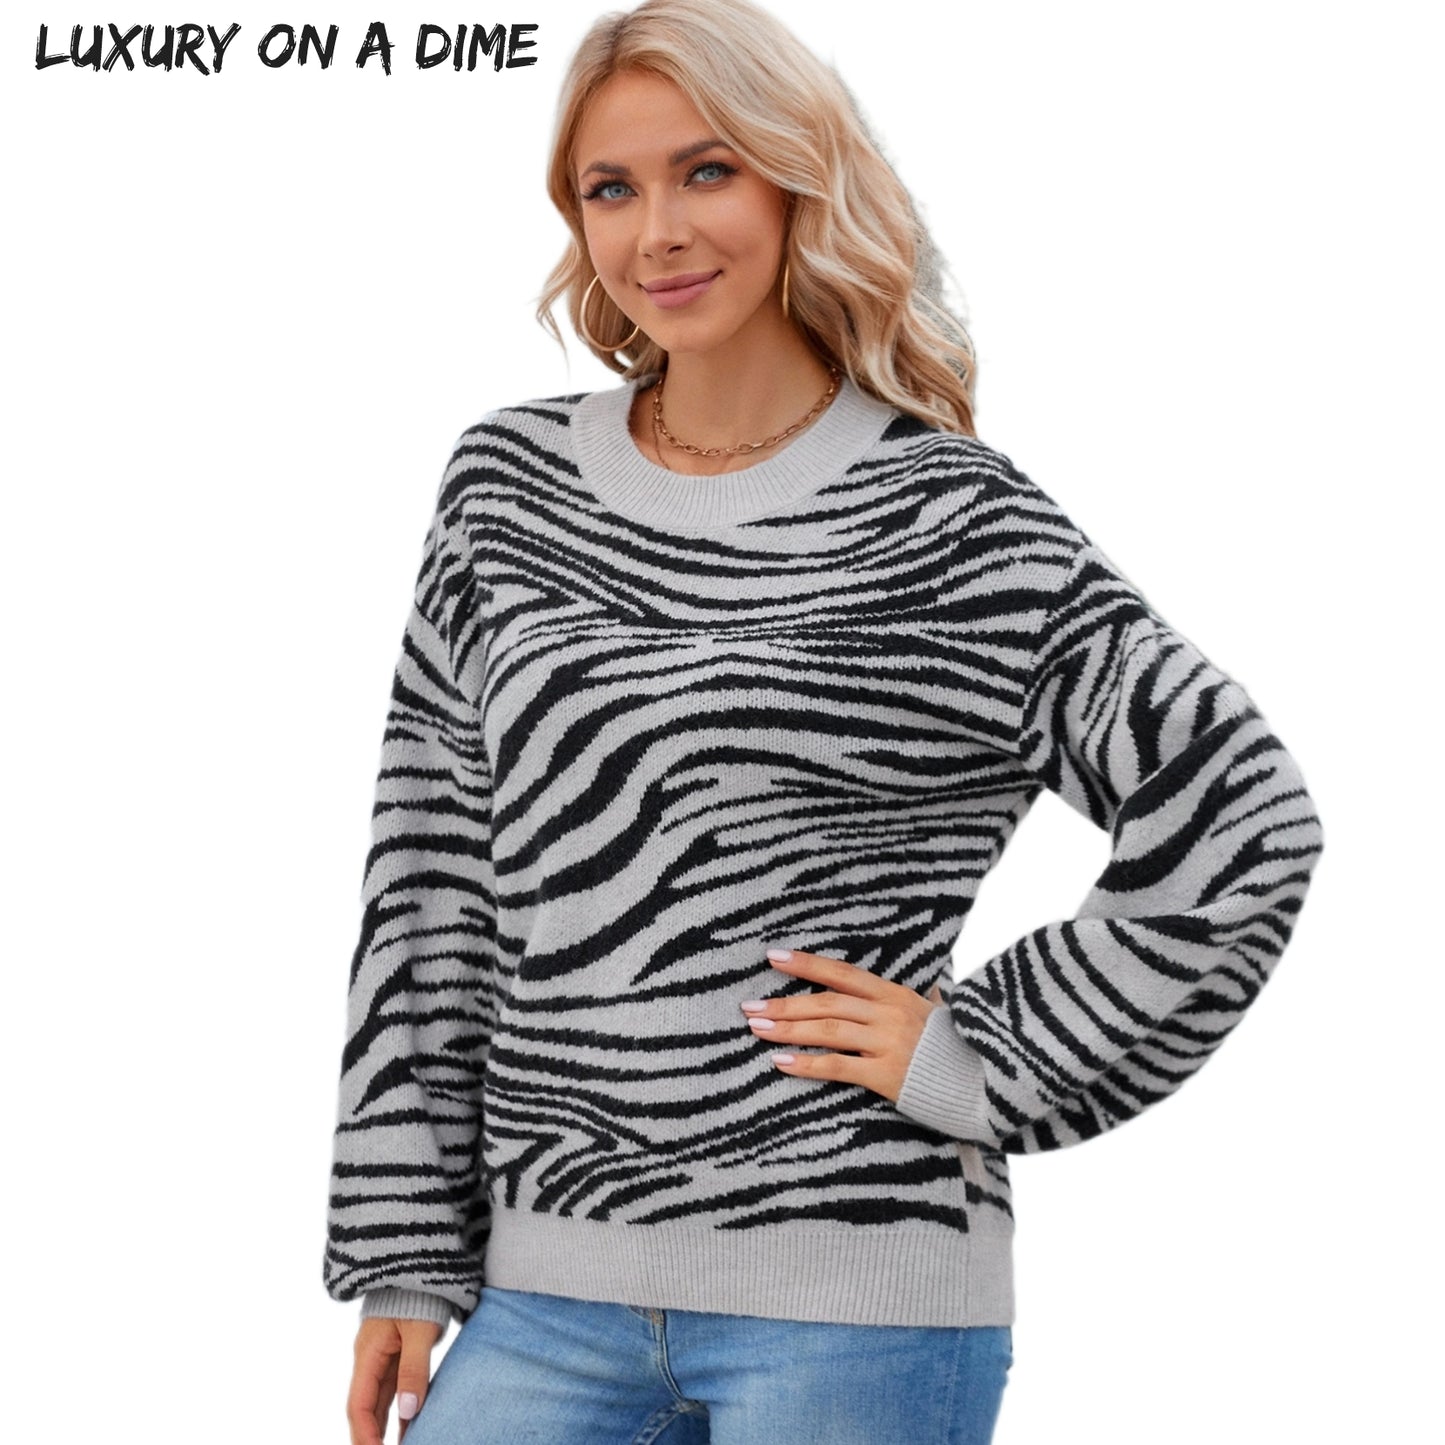 Zebra Stripe Long Sleeve Animal Print Round Neck Casual Soft Sweater Shirt